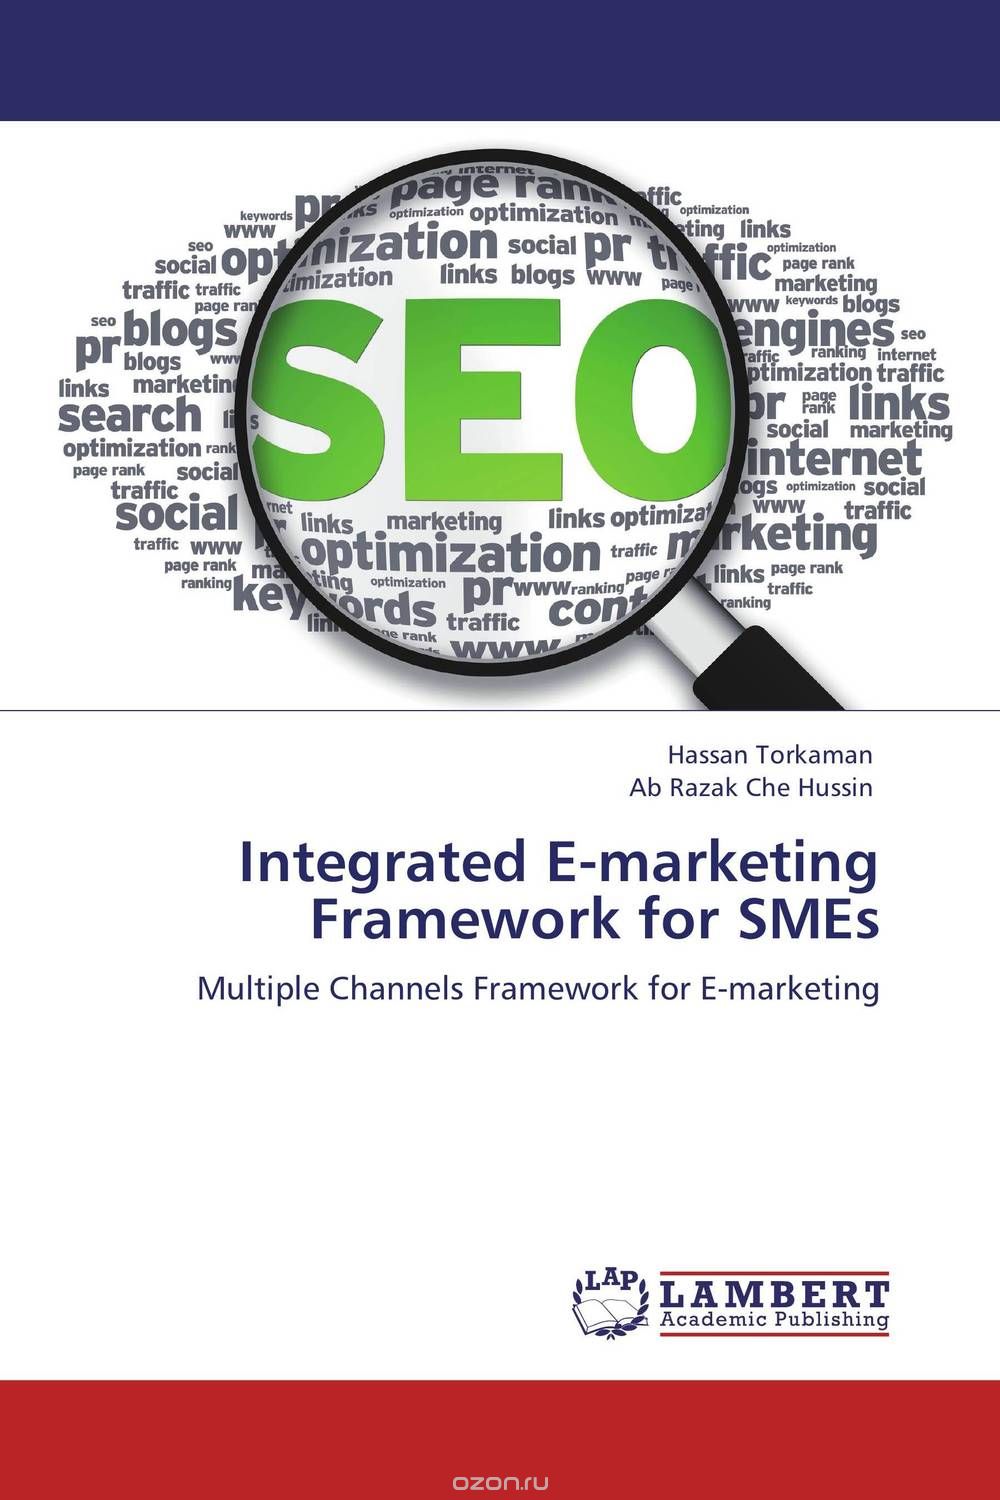 Скачать книгу "Integrated E-marketing Framework for SMEs"